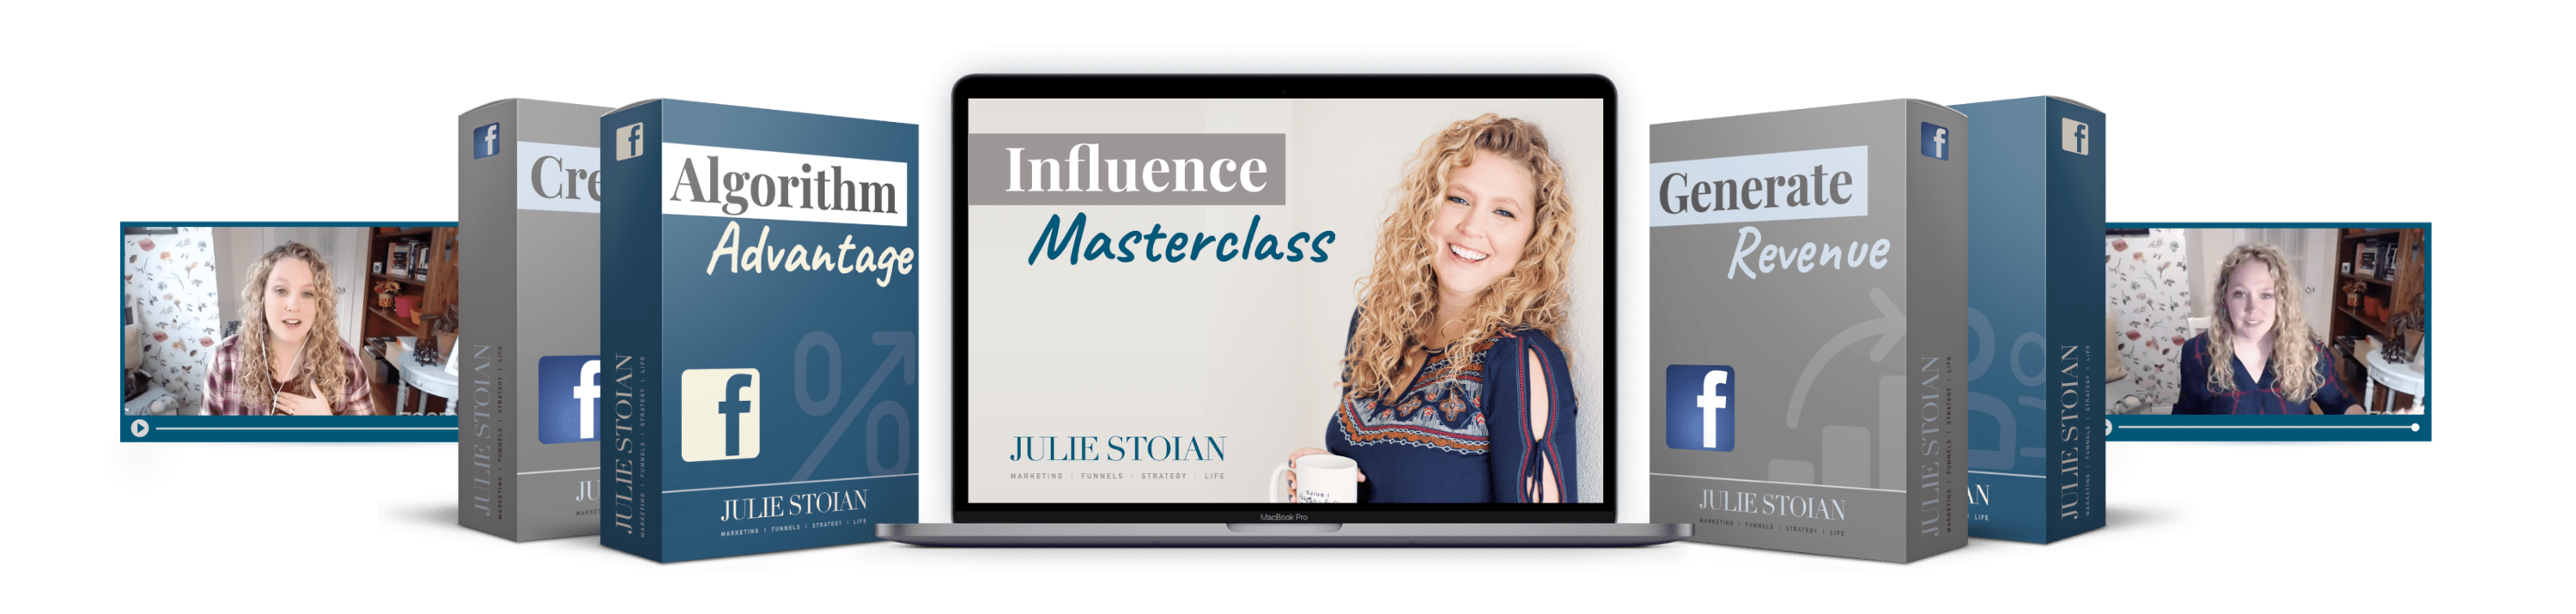 Influence Masterclass